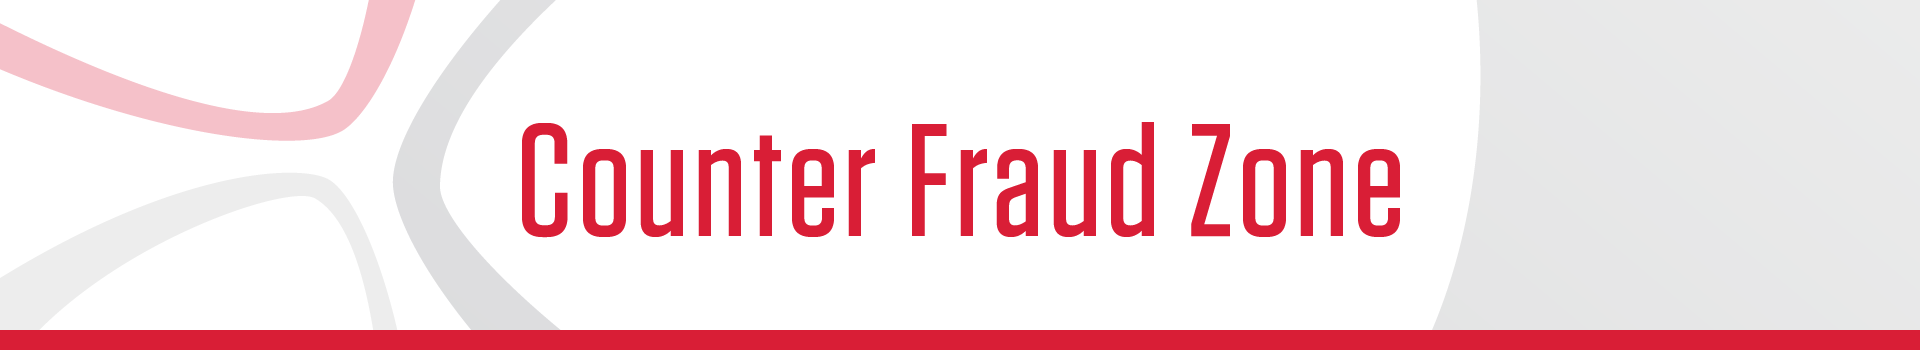 Counter Fraud Zone